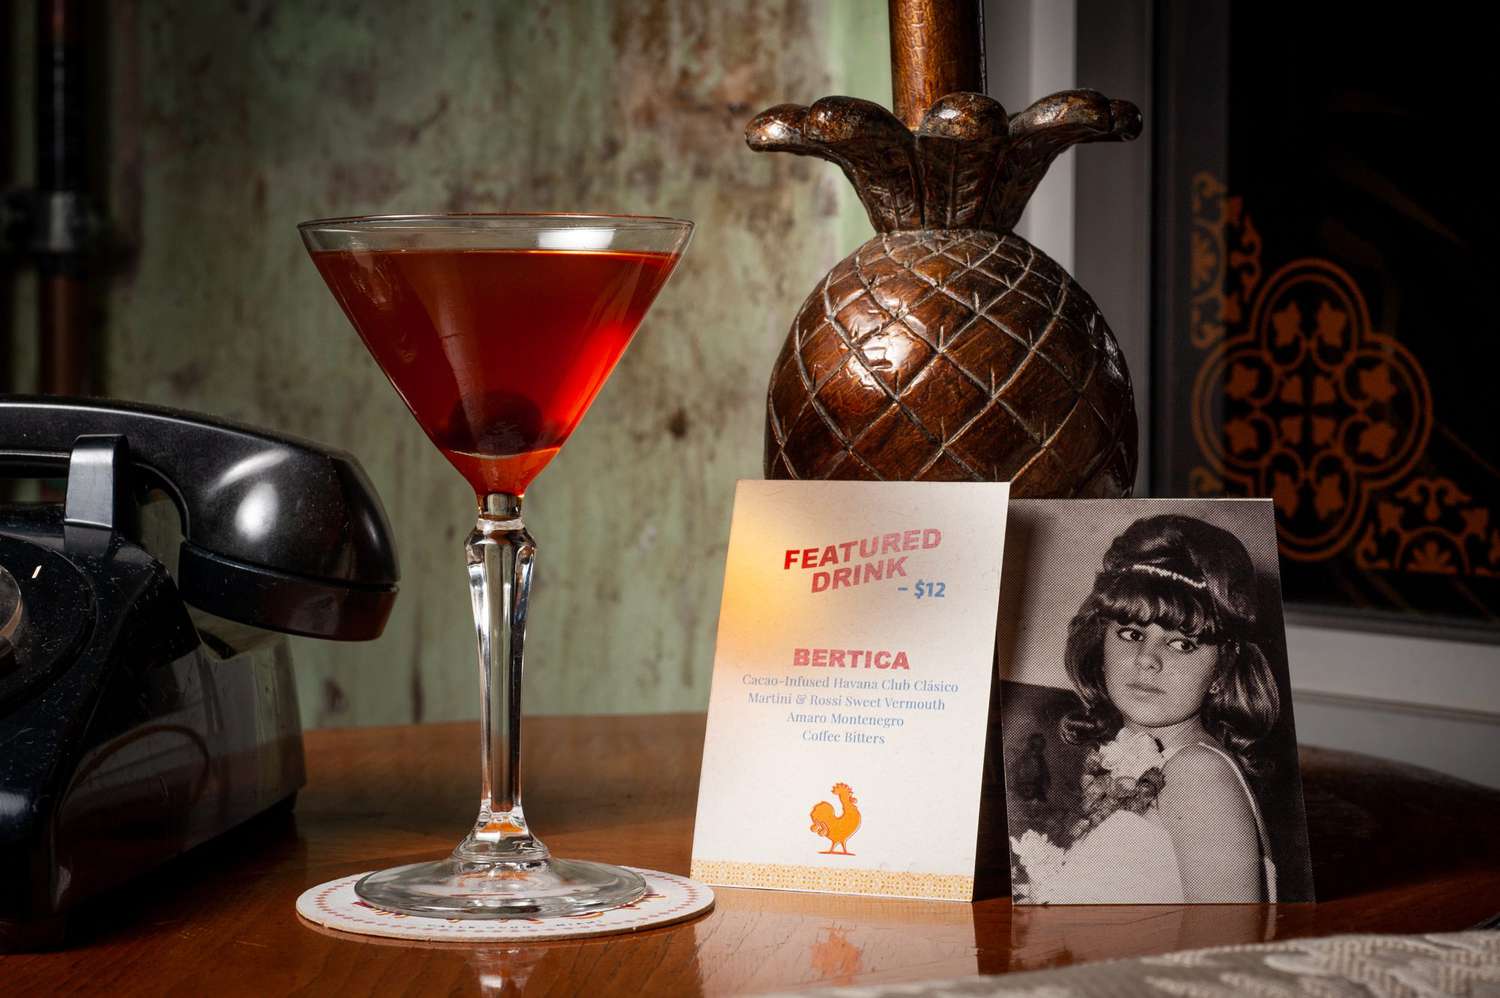 The Bertica Cocktail